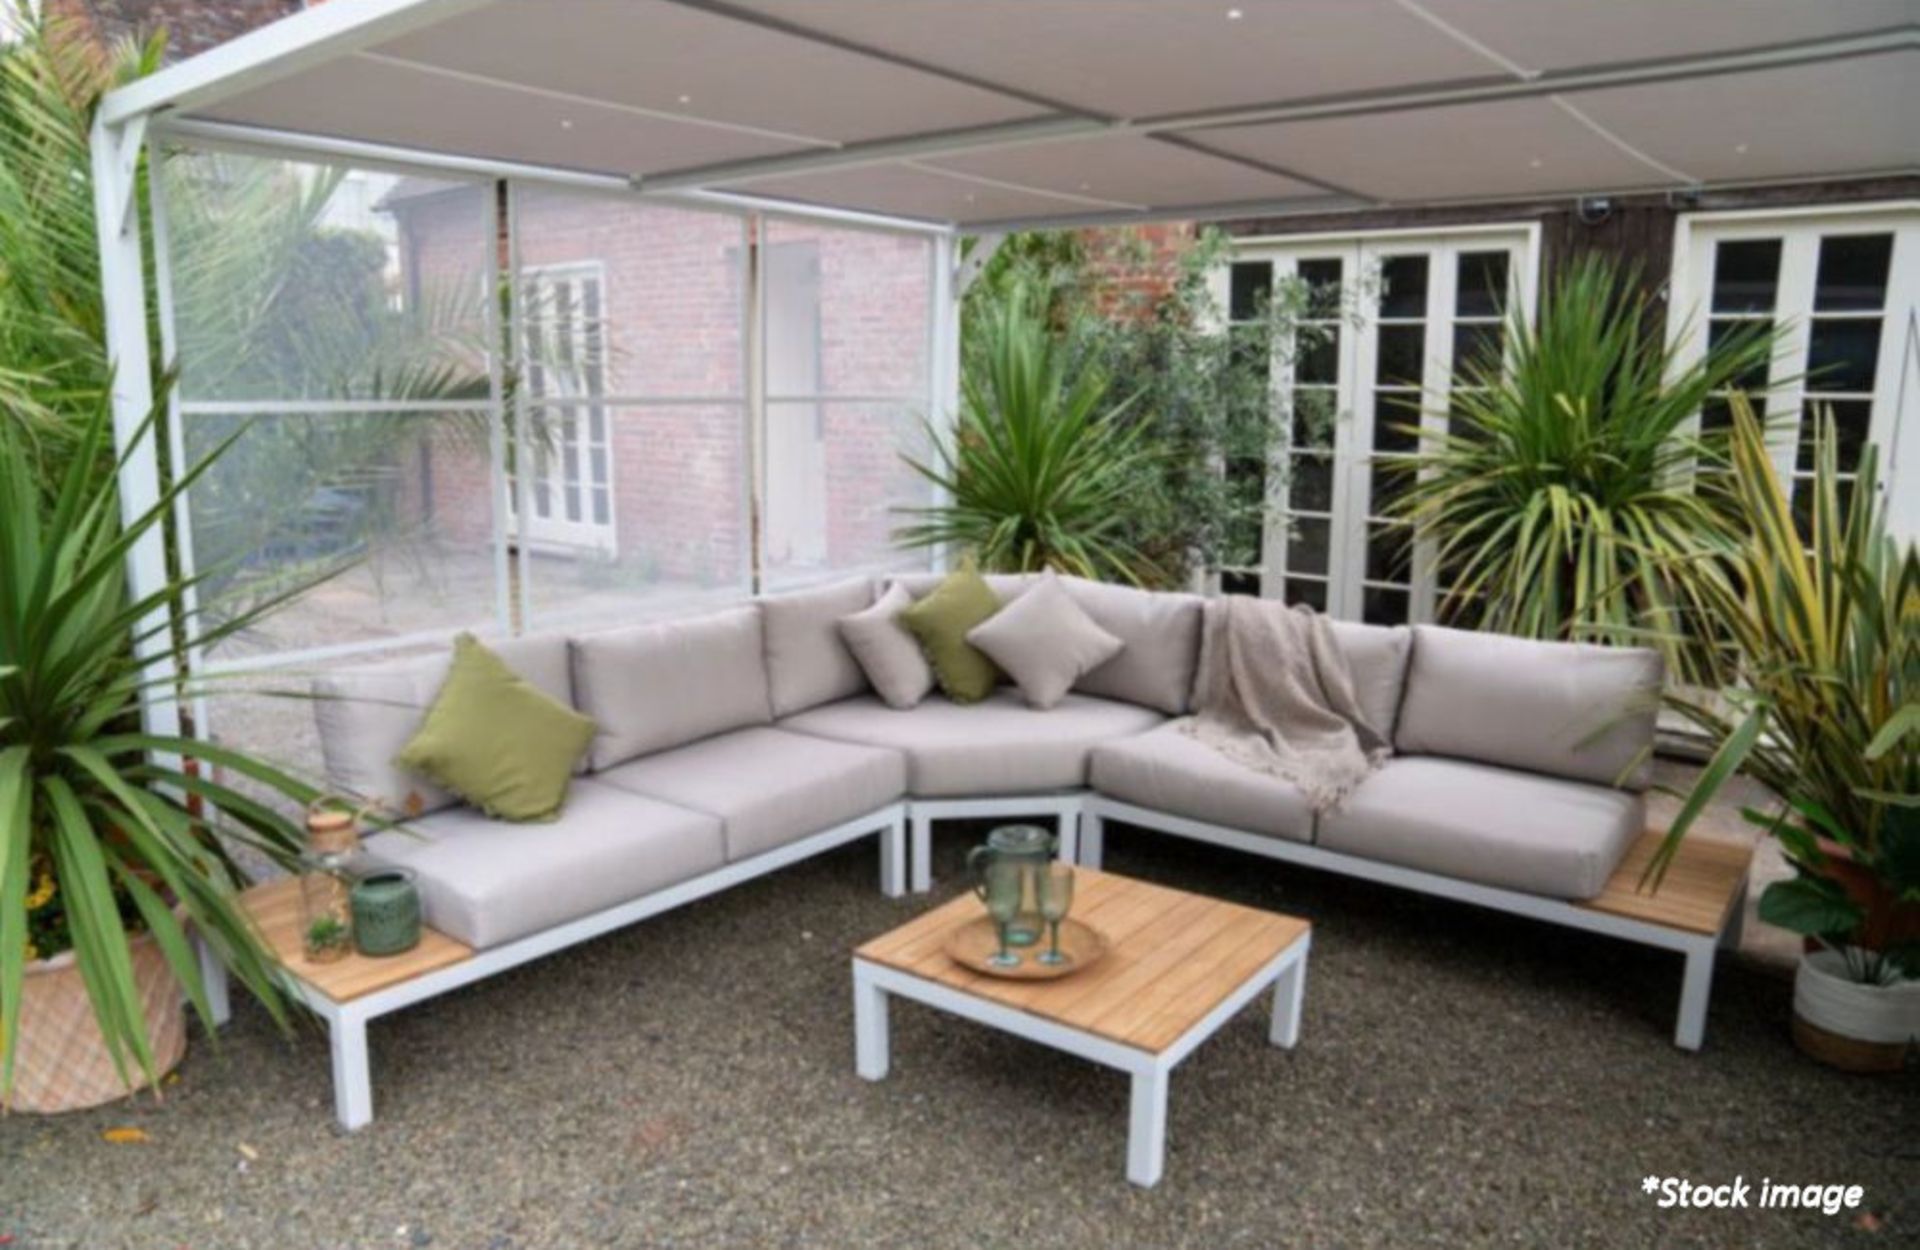 1 x KETTLER 'Elba' Low Lounge Garden Sofa & Teak Topped Table Set - Brand New - RRP £2,148.99